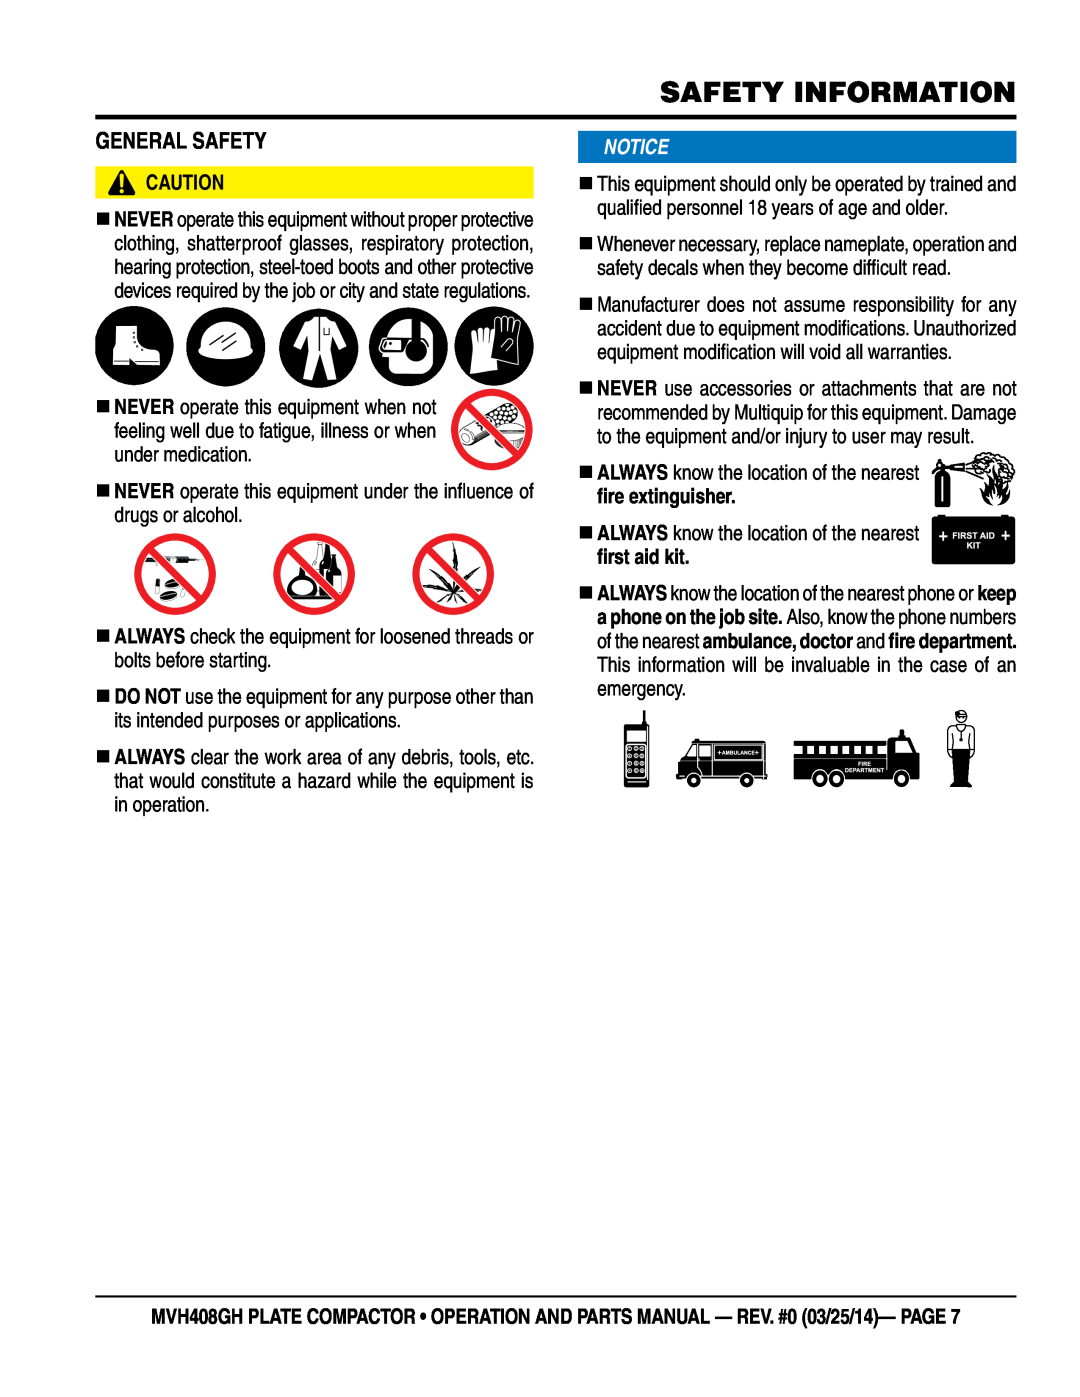 Multiquip MVH408GH manual General Safety, Safety Information 